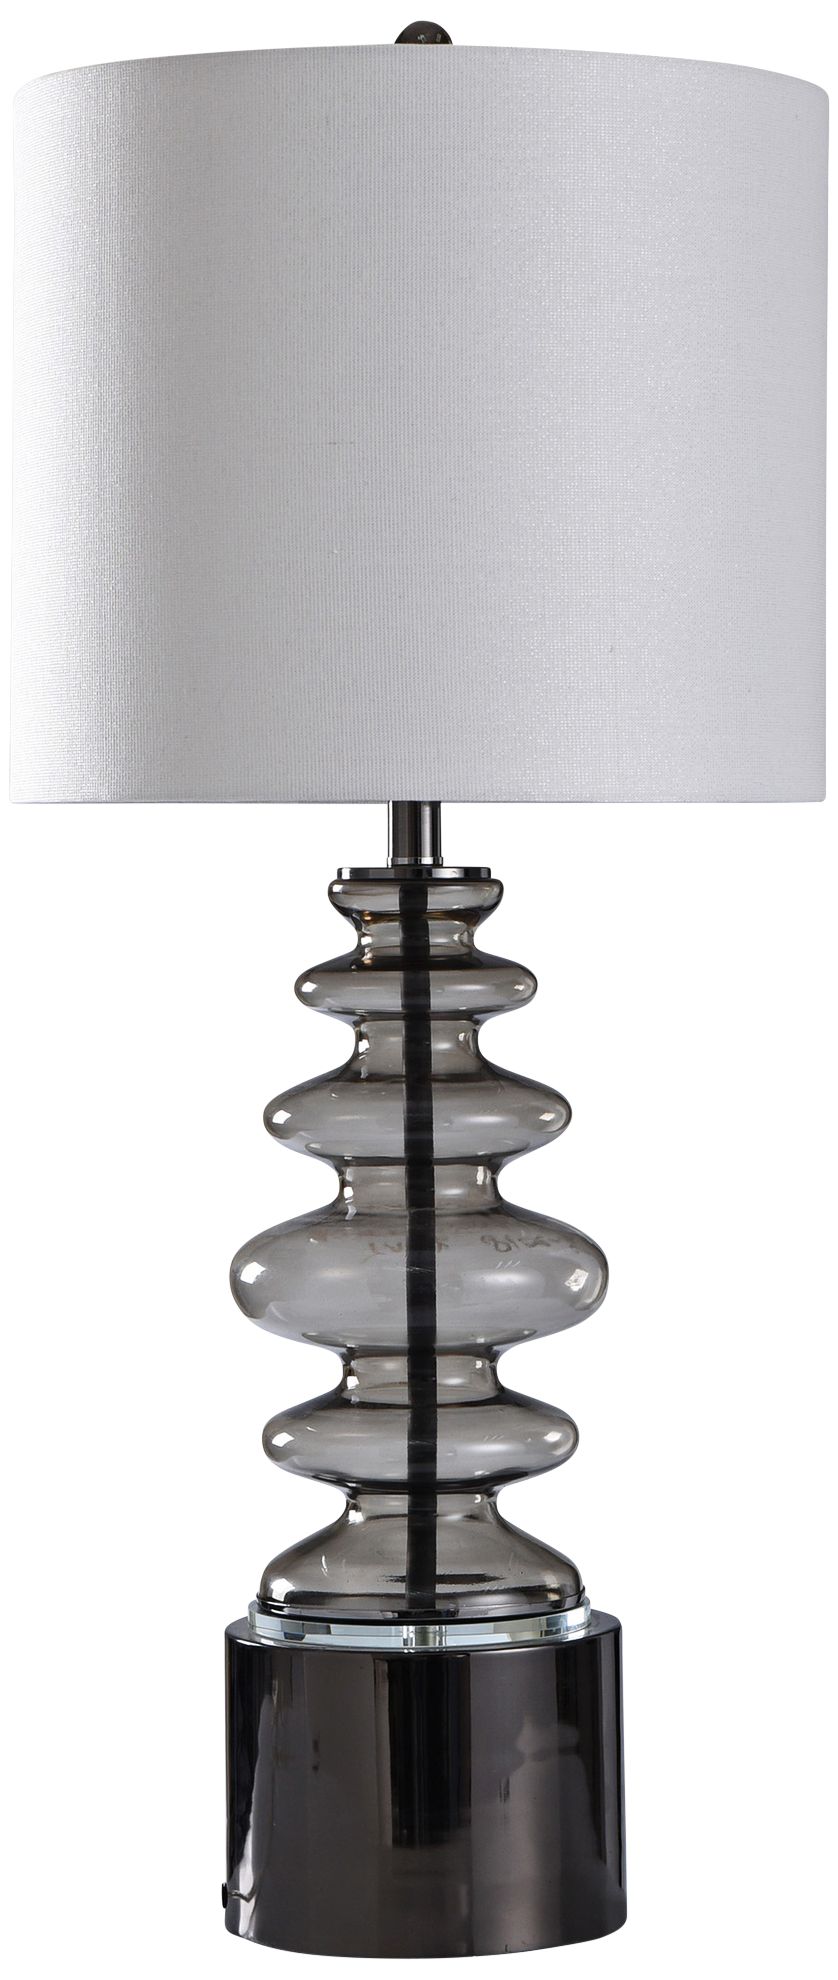 acrylic table lamp shade